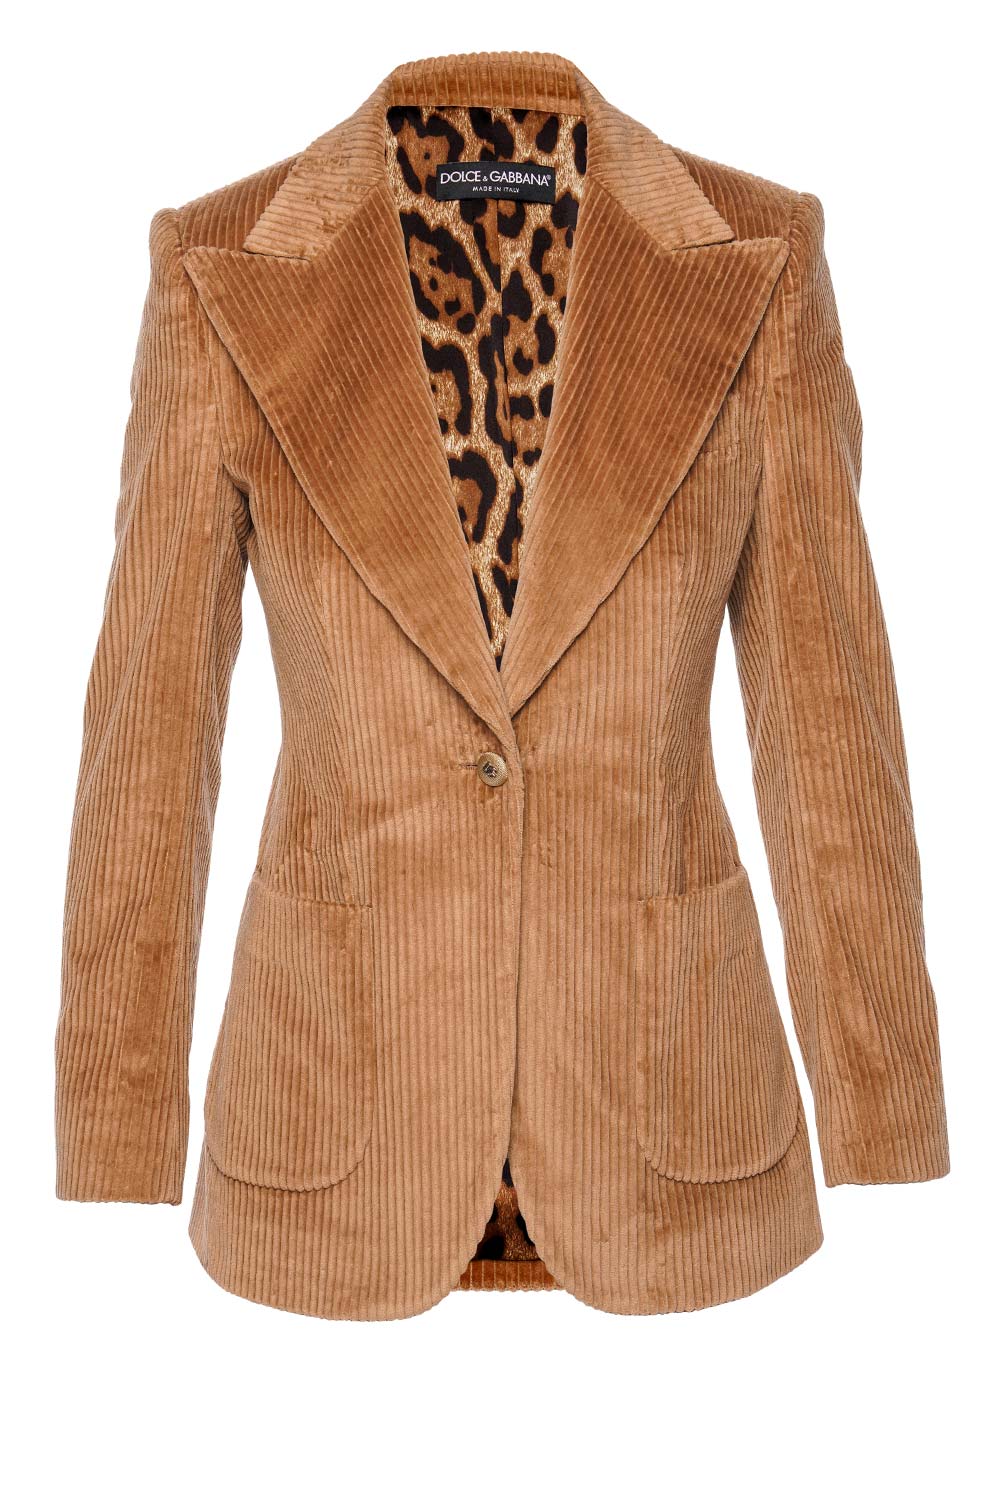 Dolce & Gabbana Single Breasted Corduroy Turlington Jacket